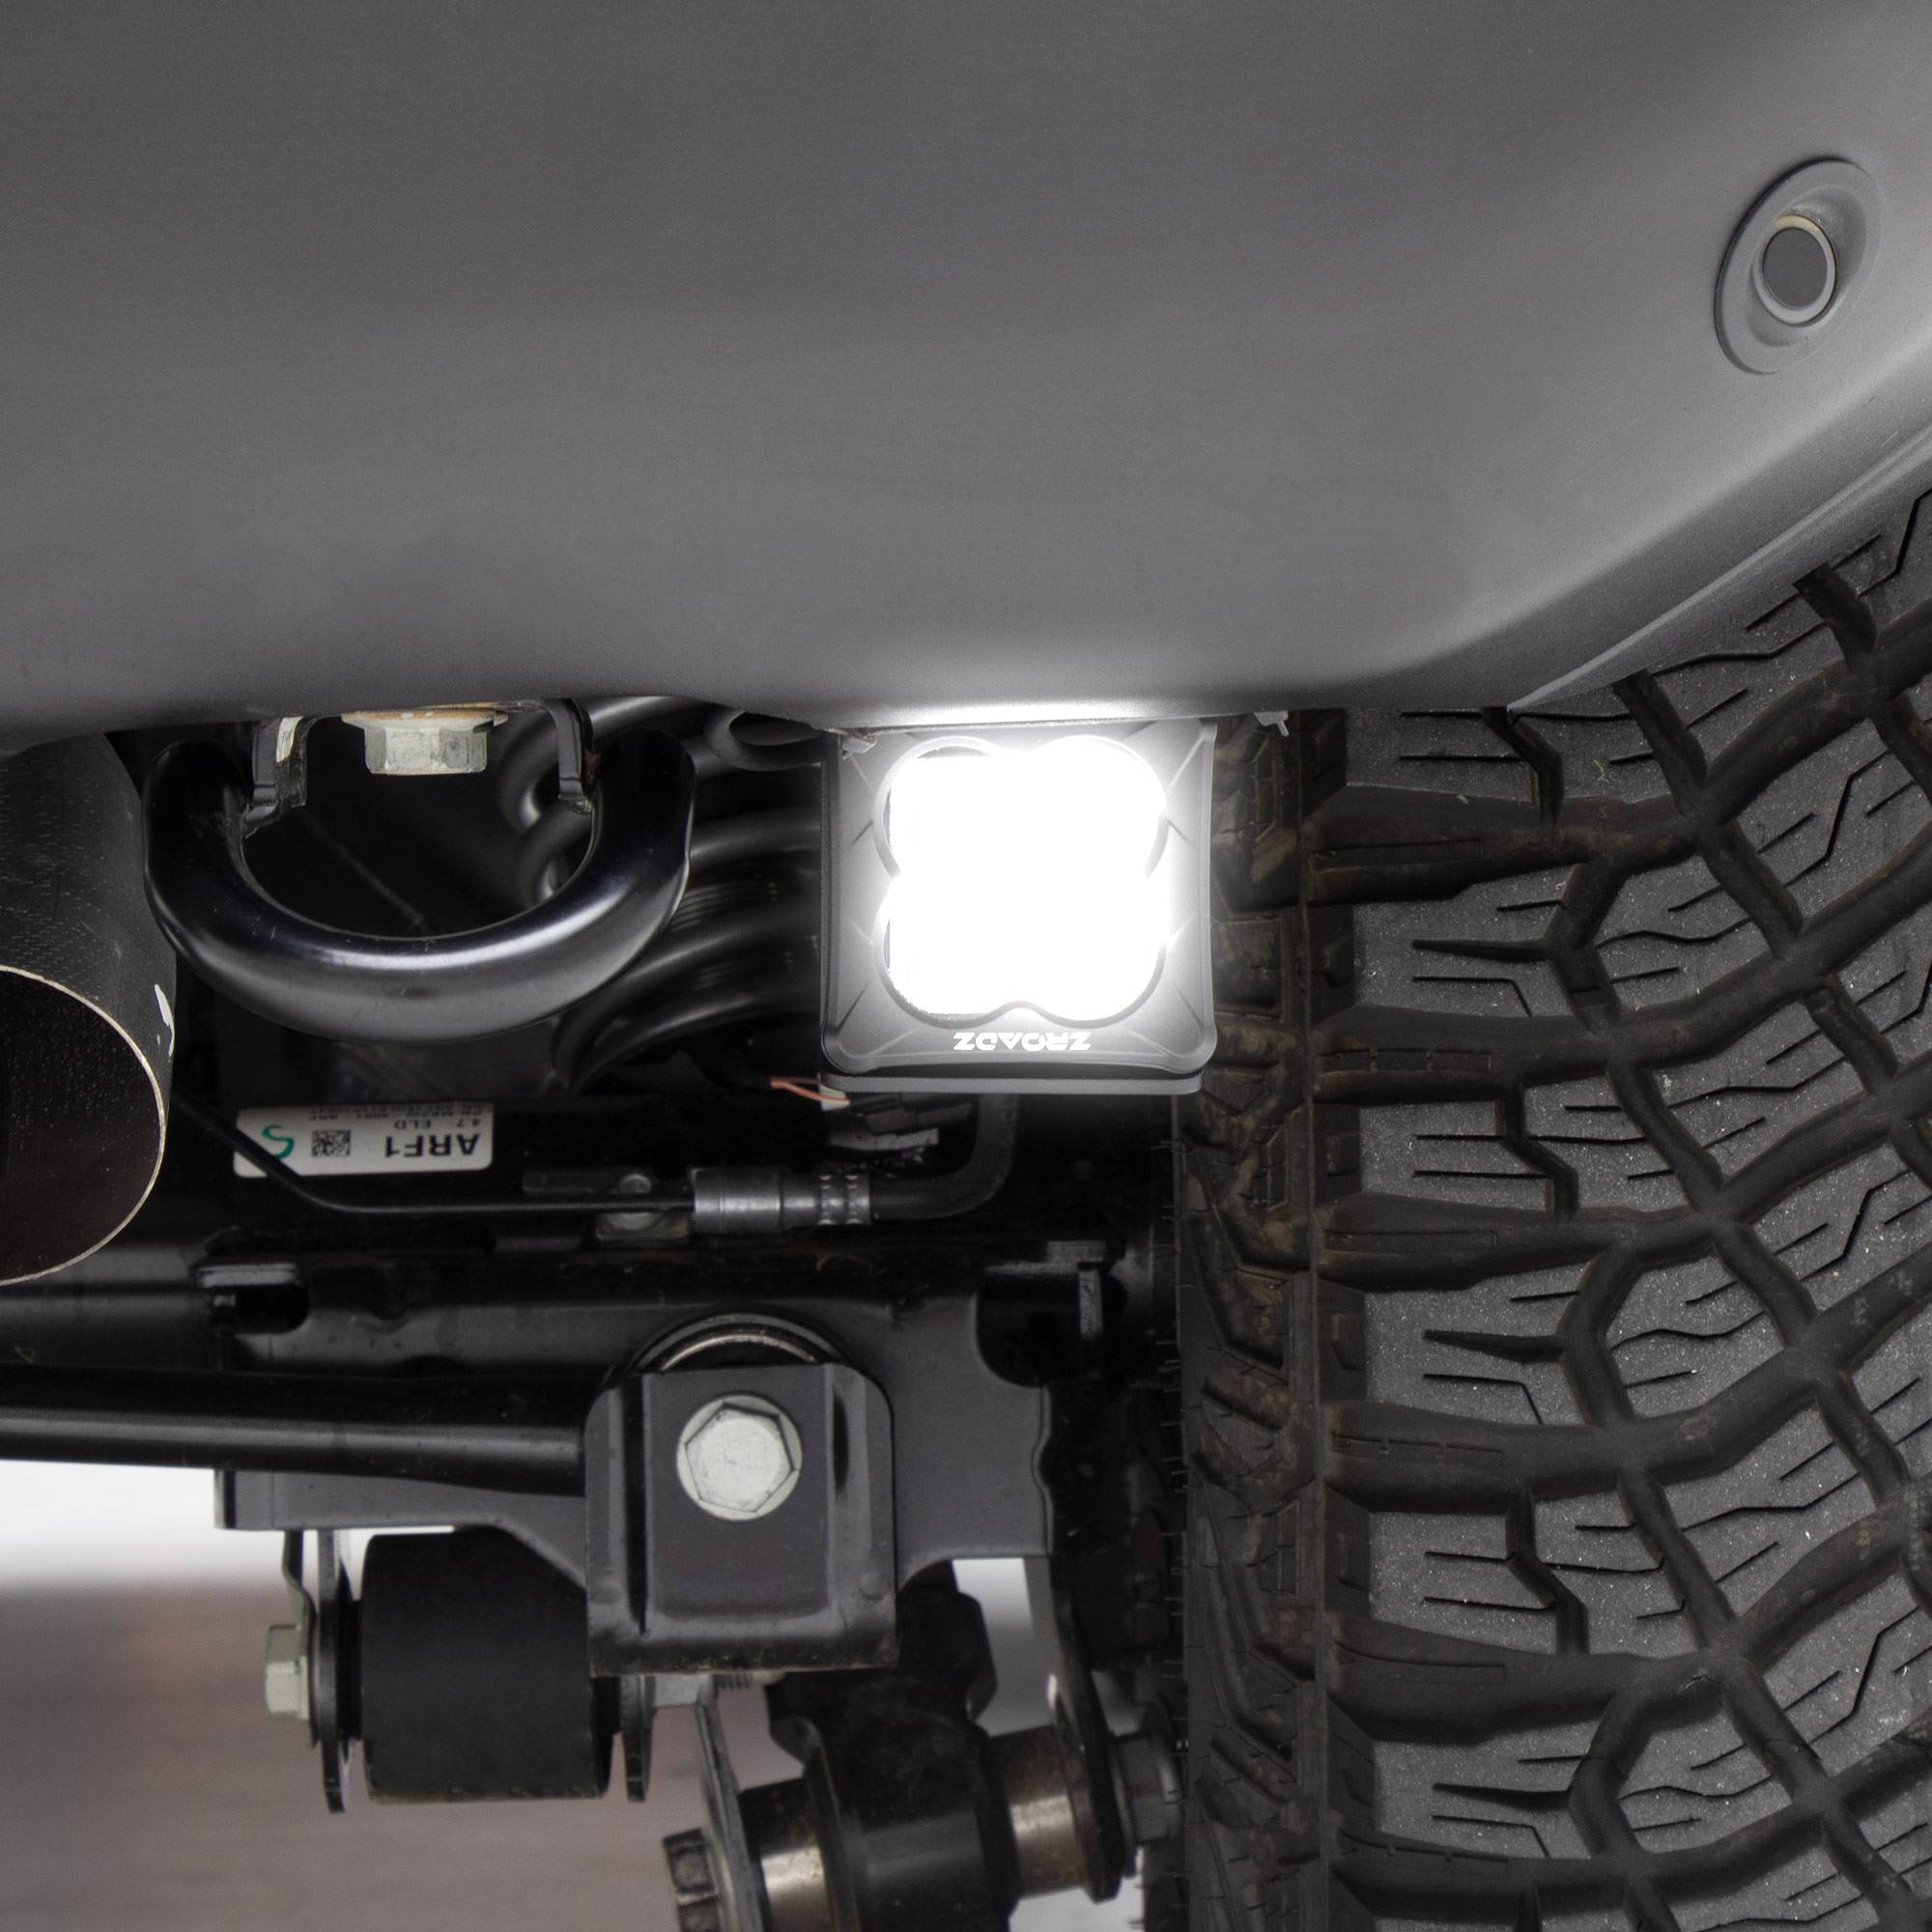 ZROADZ OFF ROAD PRODUCTS - 2021-2023 Ford Bronco Rear Bumper LED KIT, Includes (2) 3 inch ZROADZ White LED Pod Lights - Part # Z385401-KIT